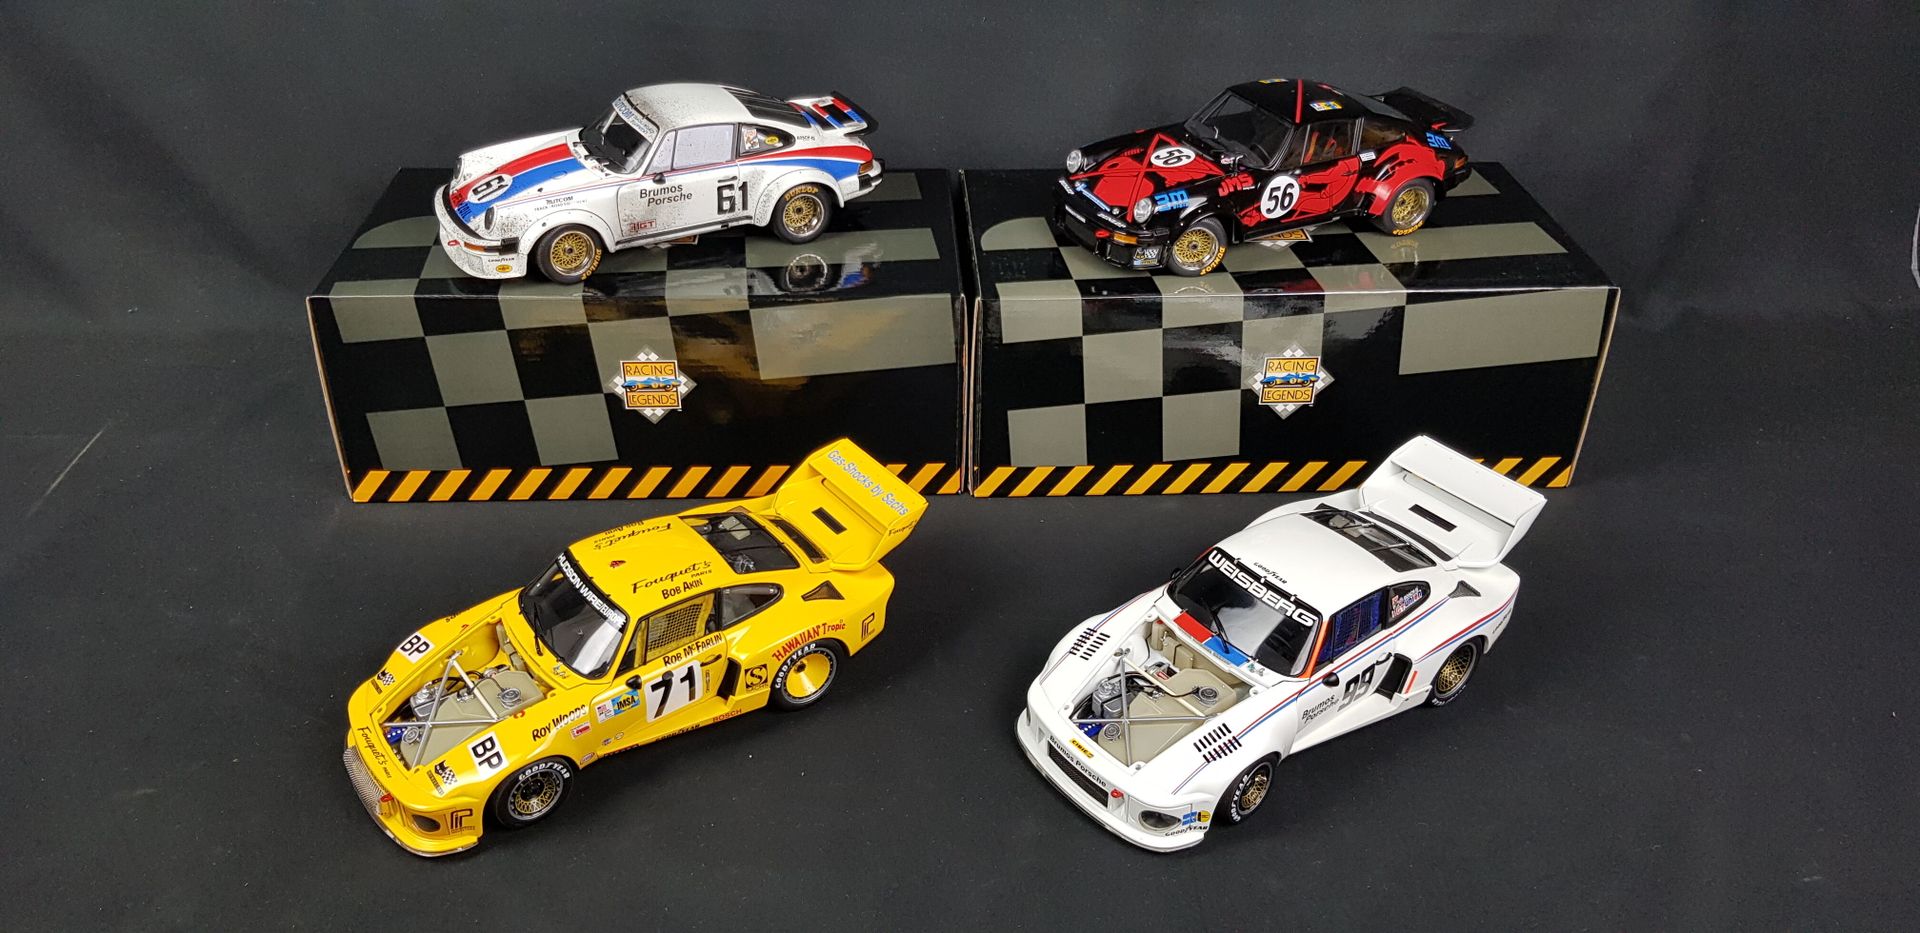 Null RACING LEGENDS - FOUR PORSCHE 1/18 scale:

2x Porsche 934RSR

2x Porsche 93&hellip;